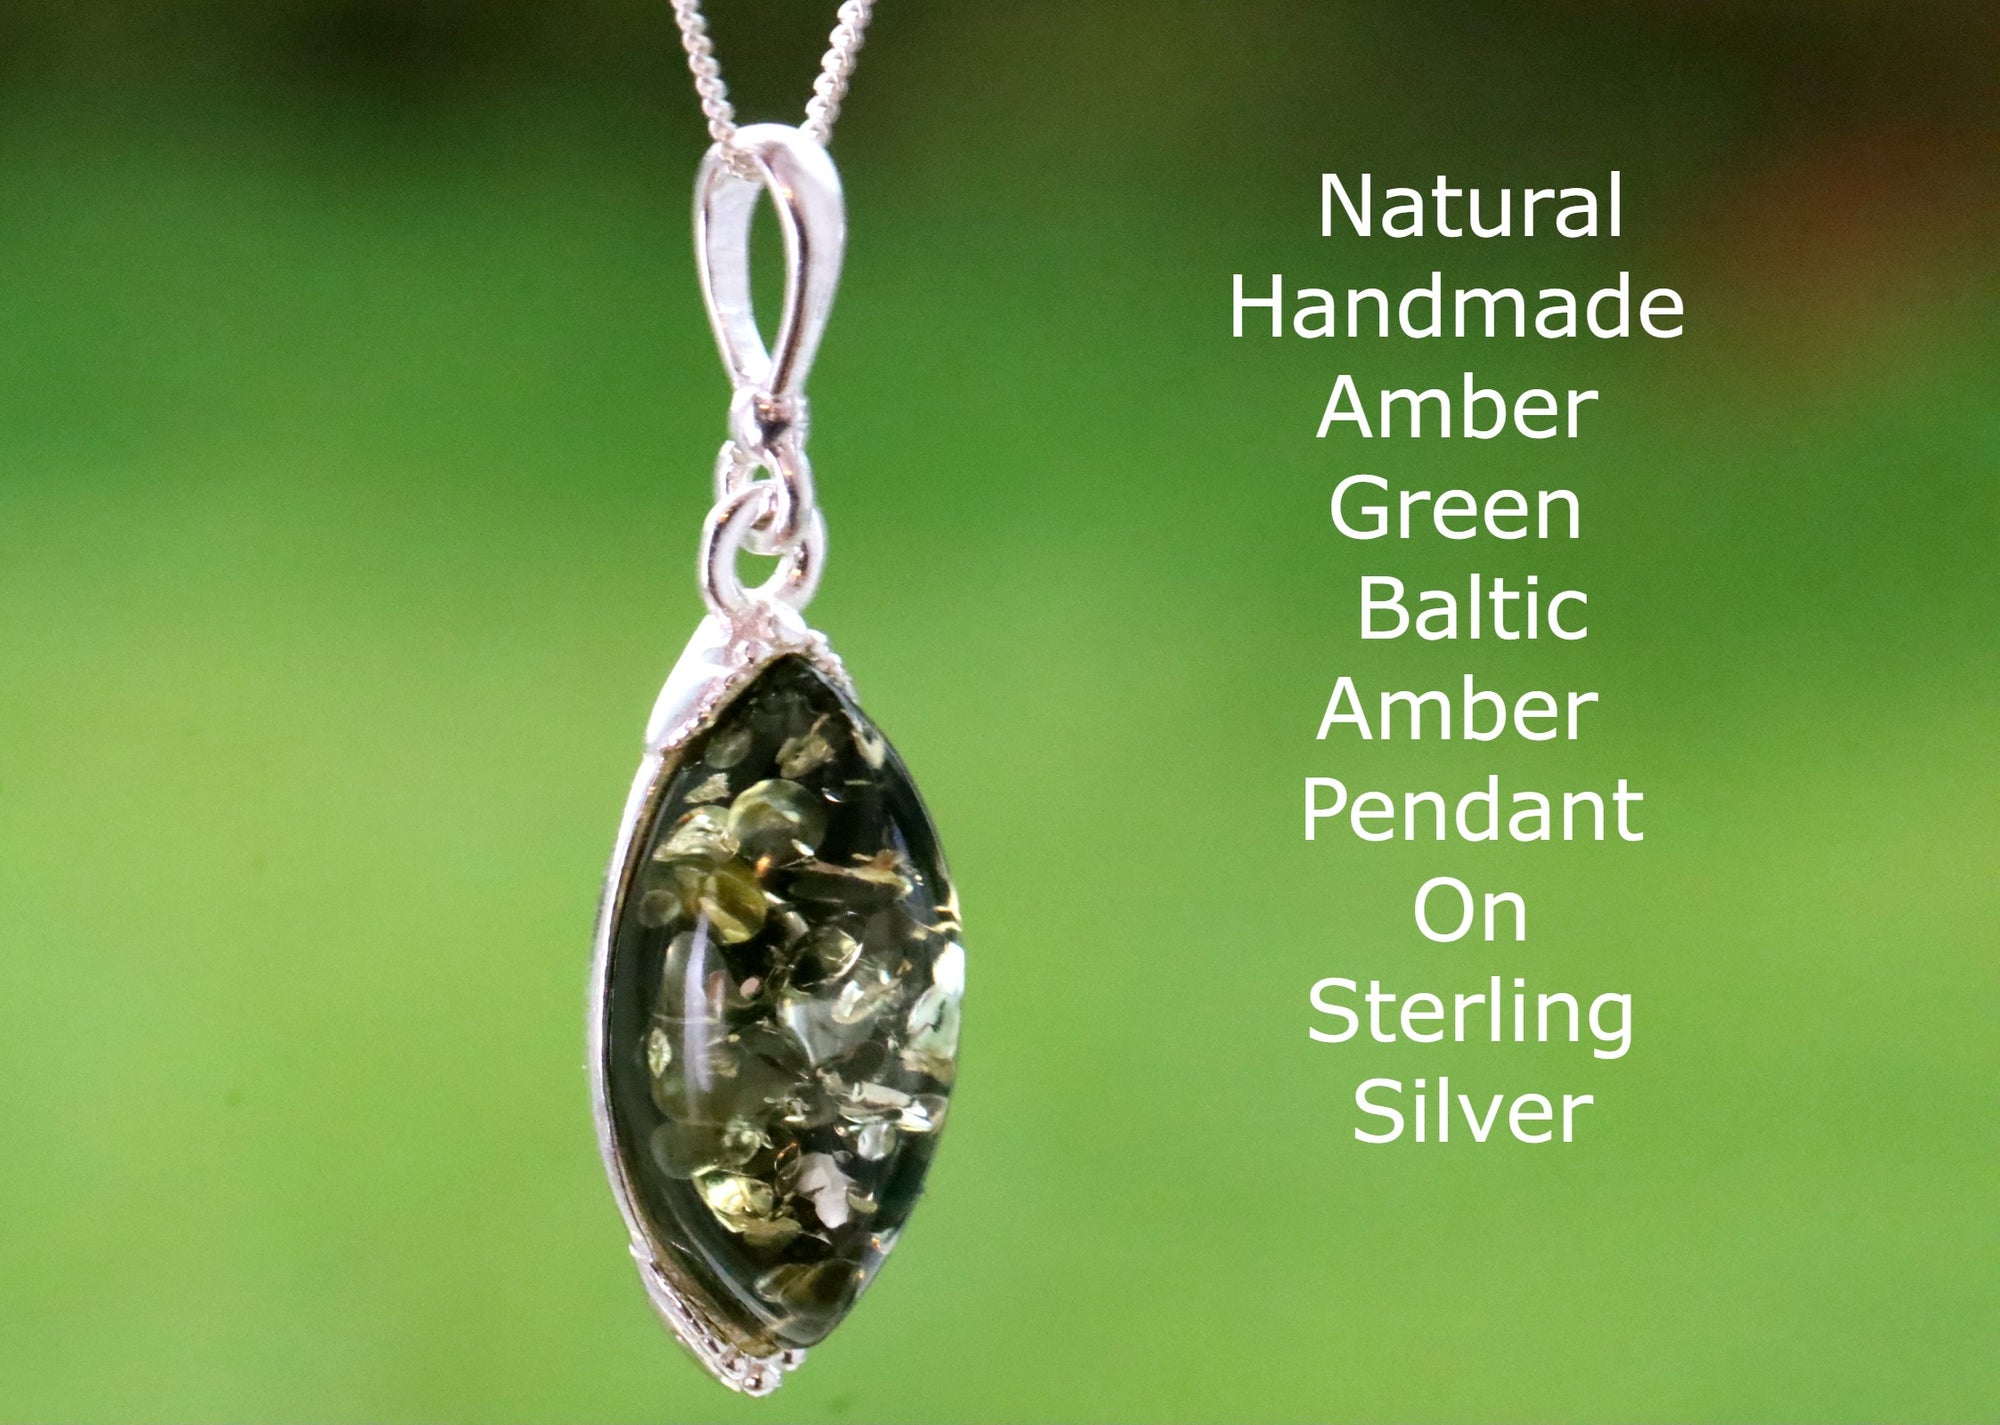 Handmade Amber Green Baltic Amber Pendant on Sterling Silver